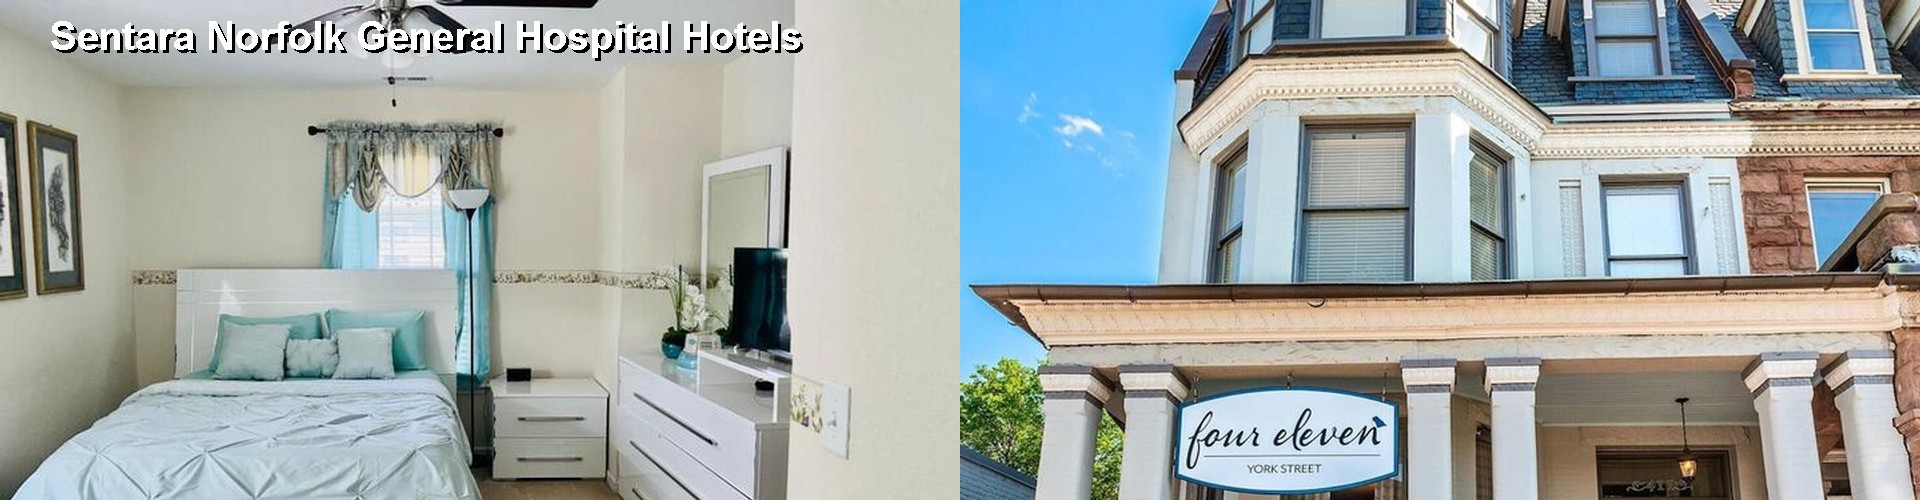 5 Best Hotels near Sentara Norfolk General Hospital